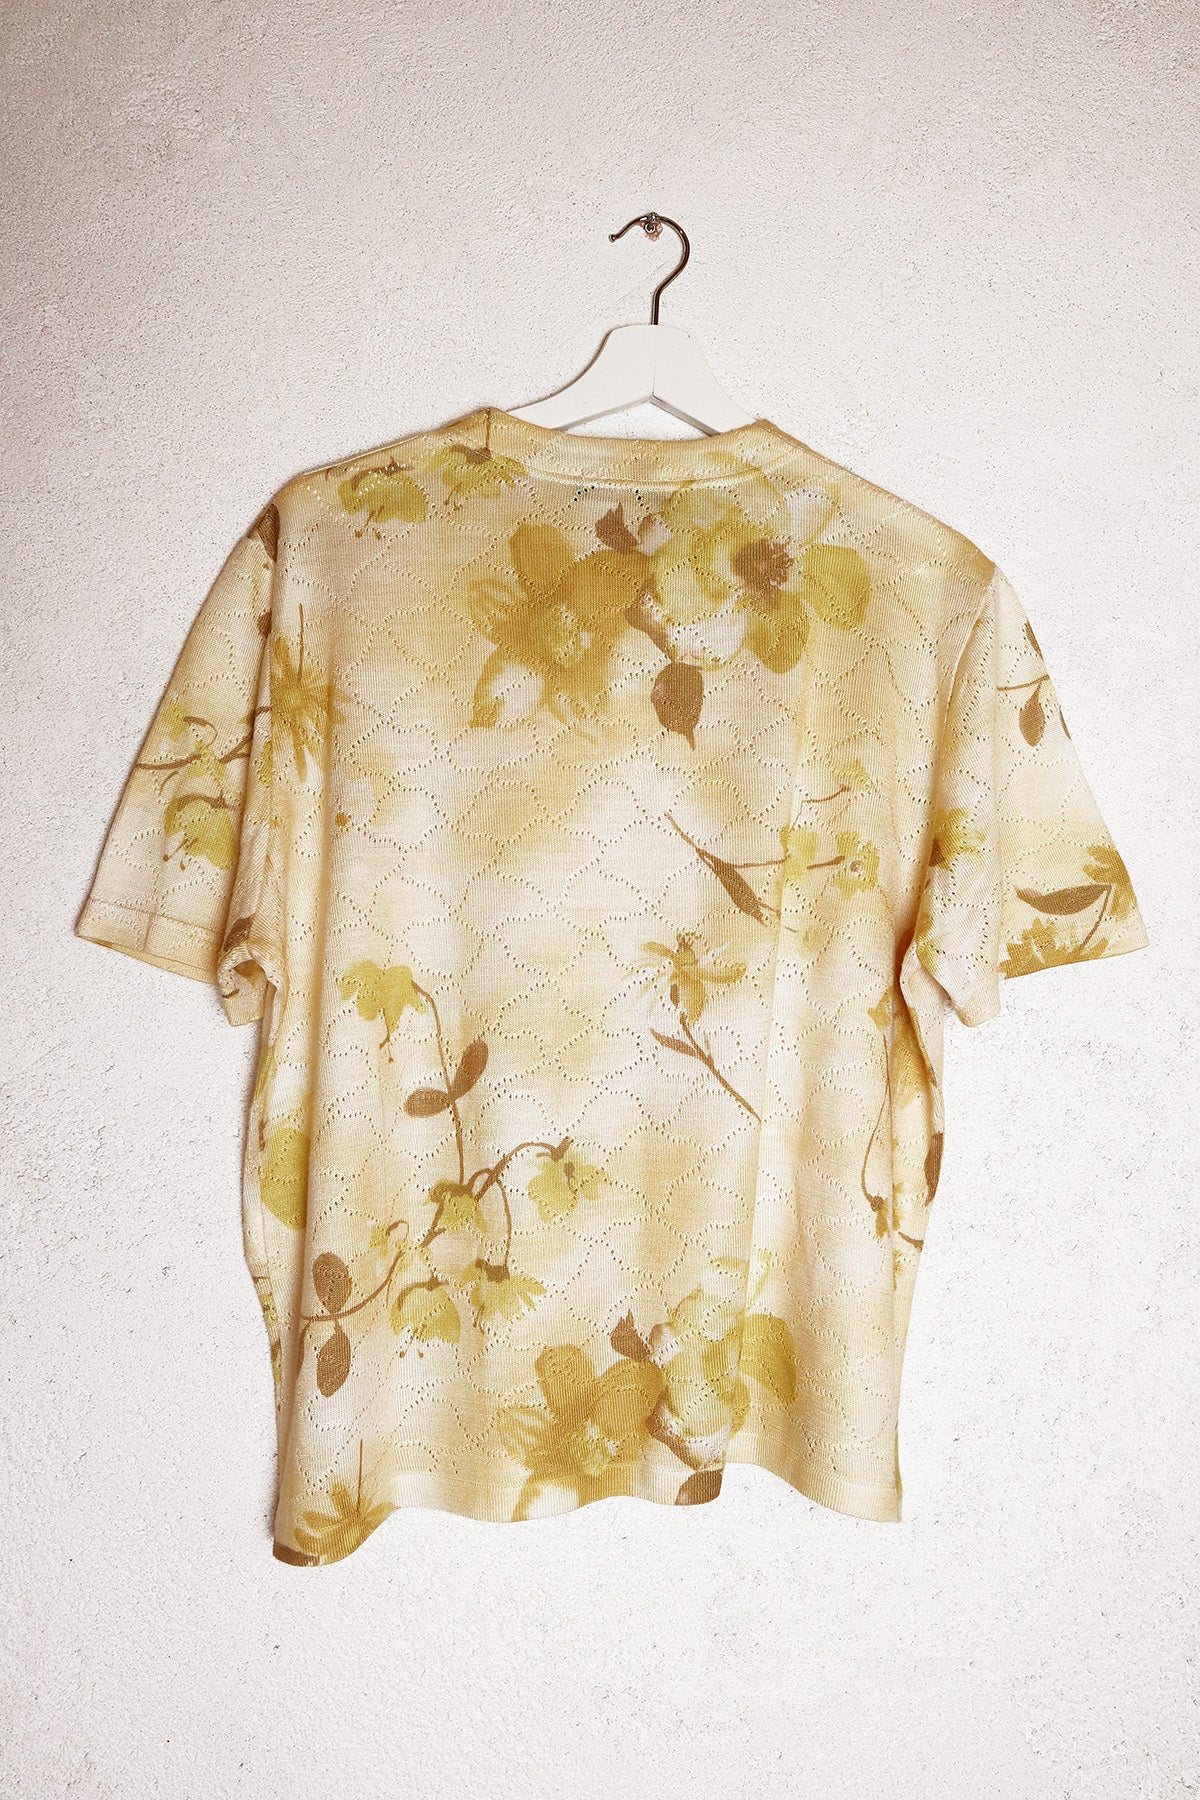 T-Shirt Vintage Zarte Blumen ( Gr. M/L )